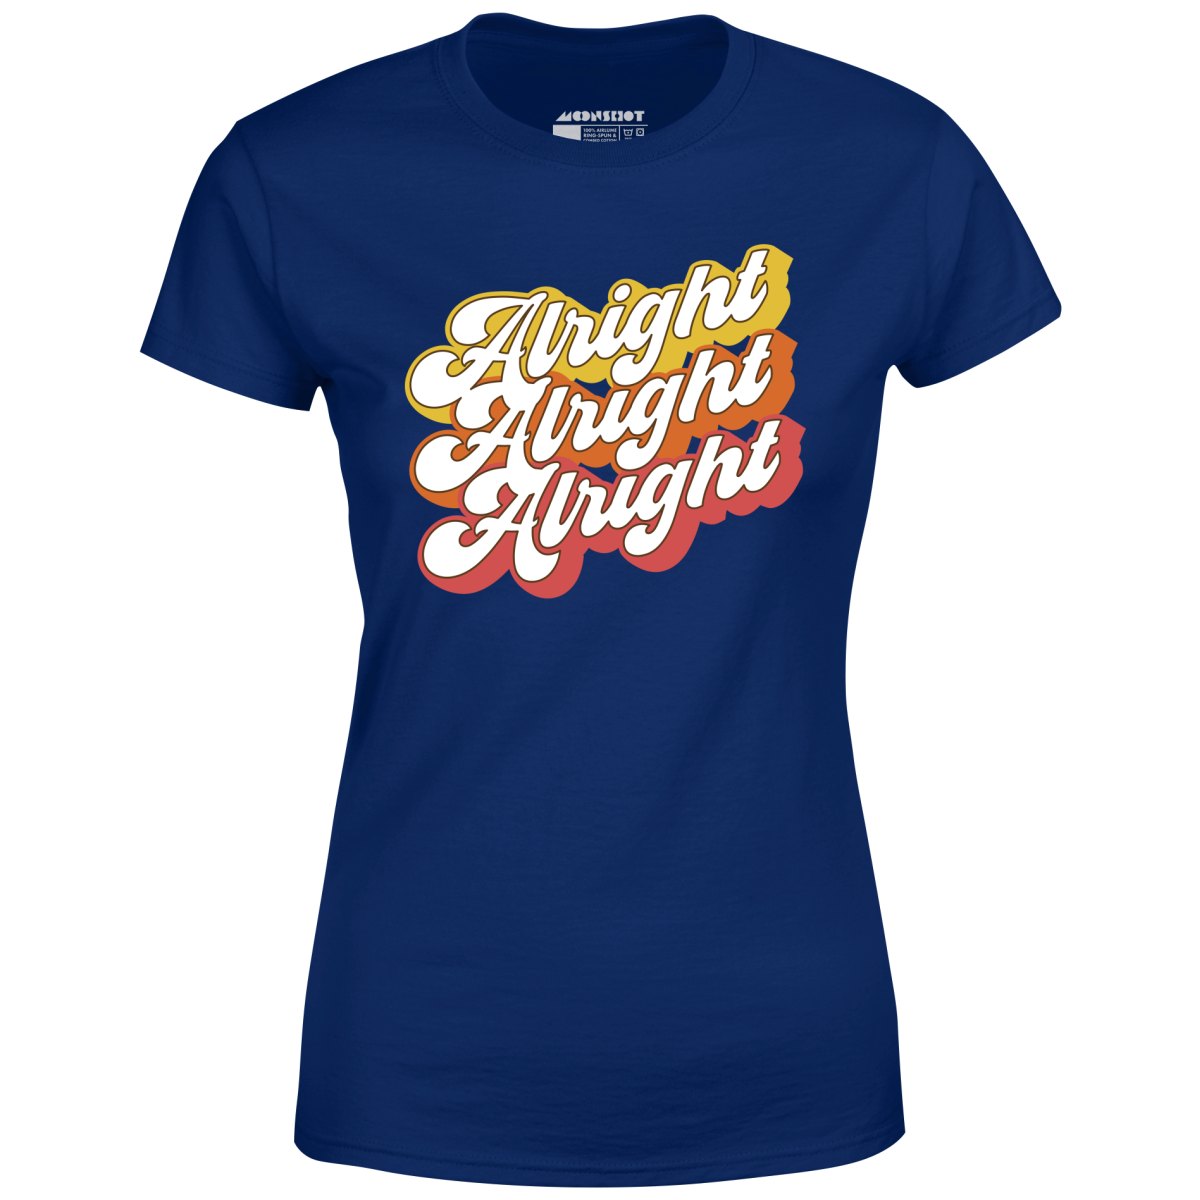 Alright Alright Alright - Women's T-Shirt